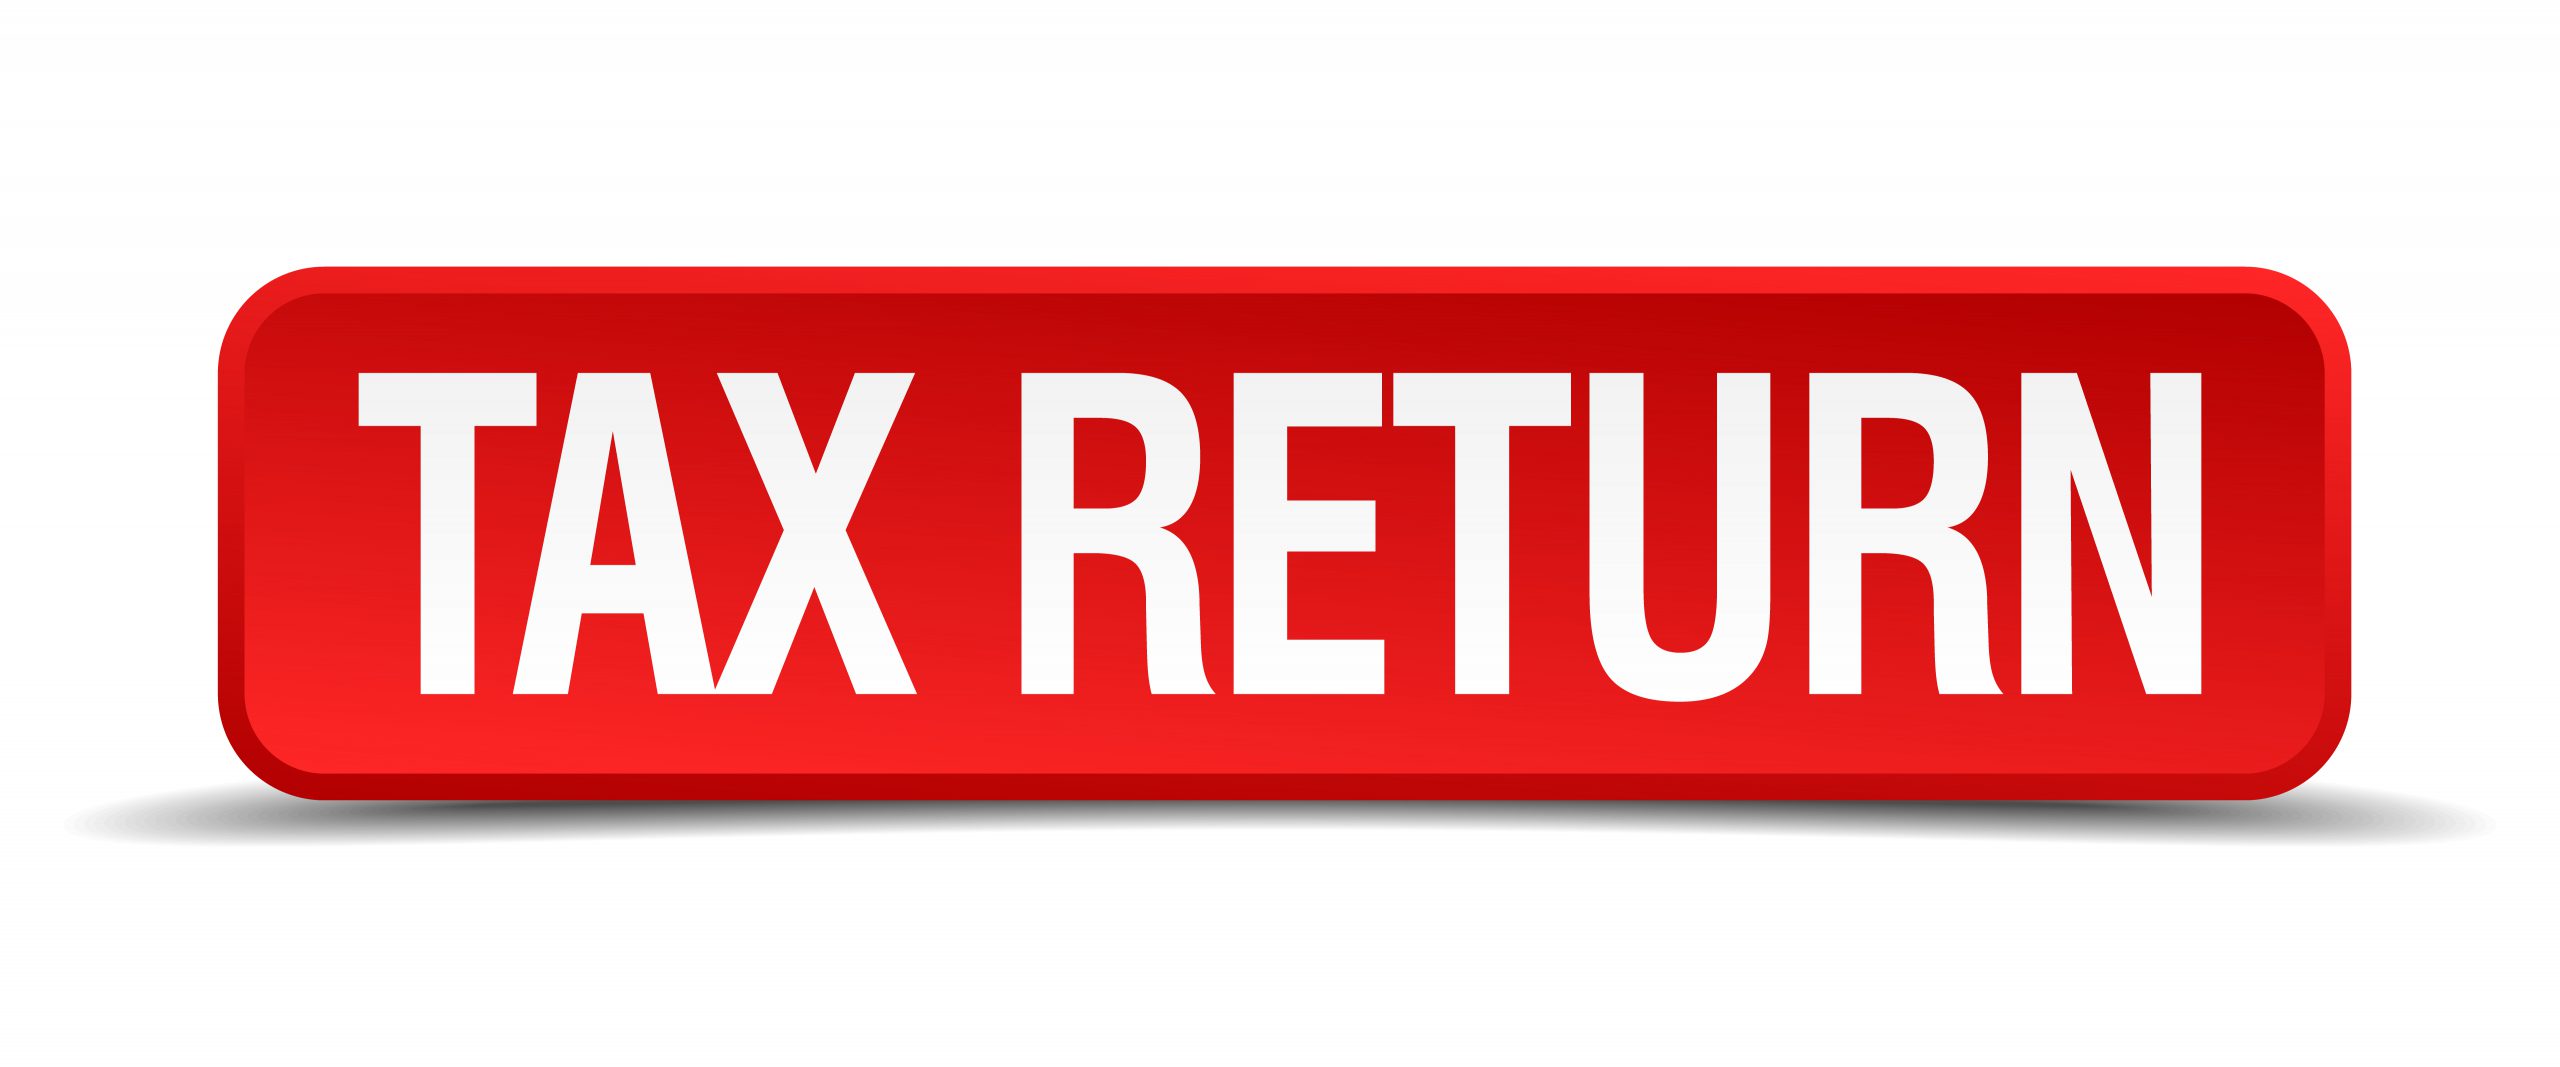 tax return sign (red)